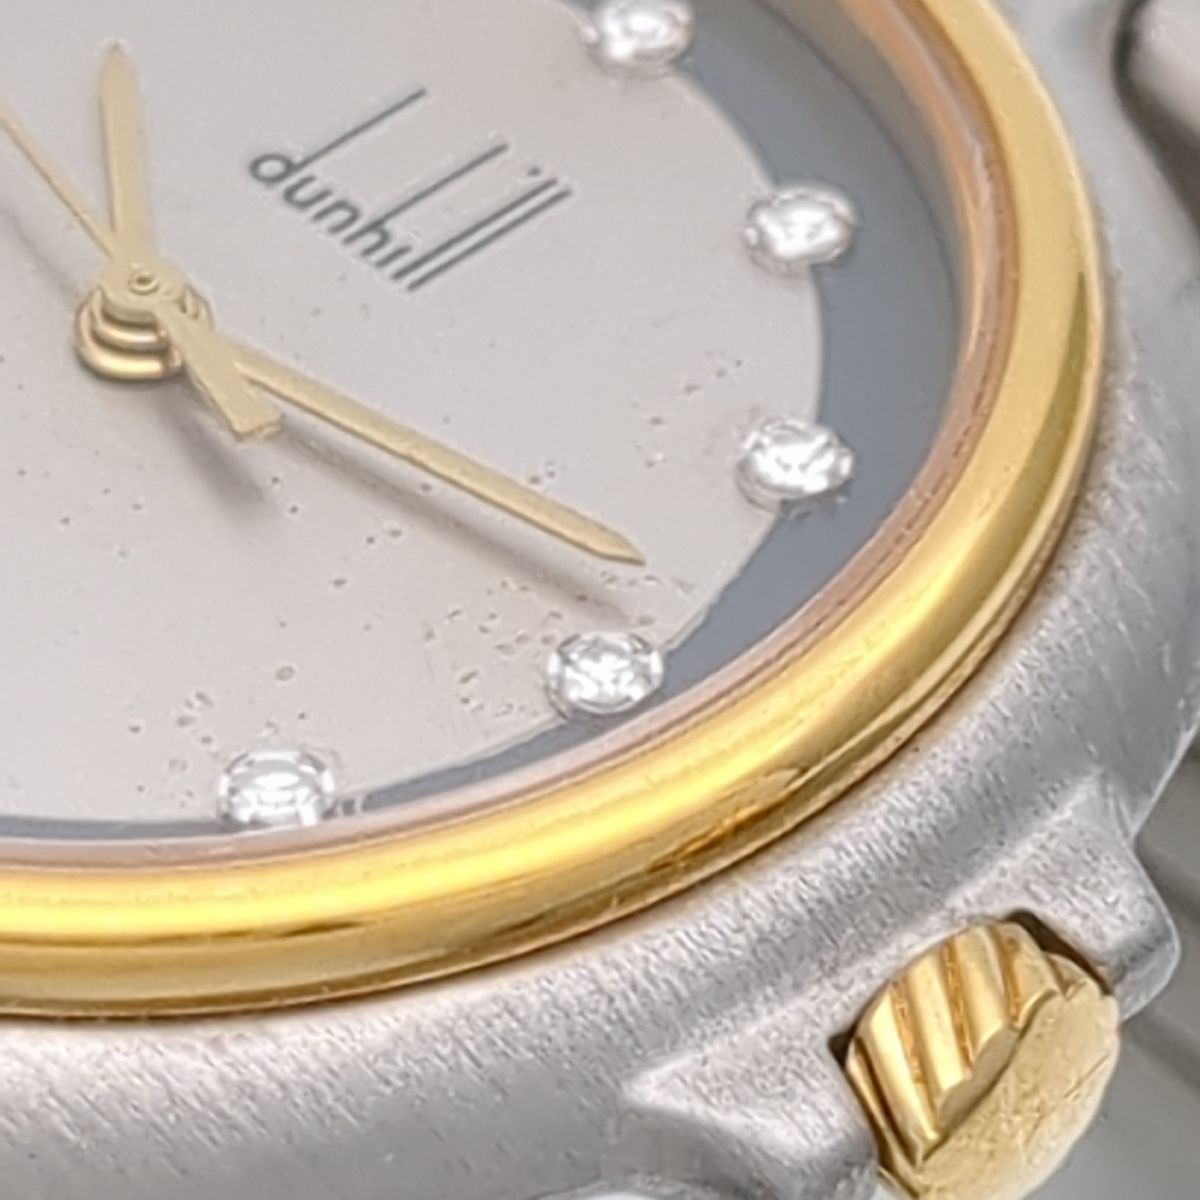  Dunhill millenium кварц diamond серебряный dial женский SS dunhill наручные часы б/у *3114/ высота . магазин 